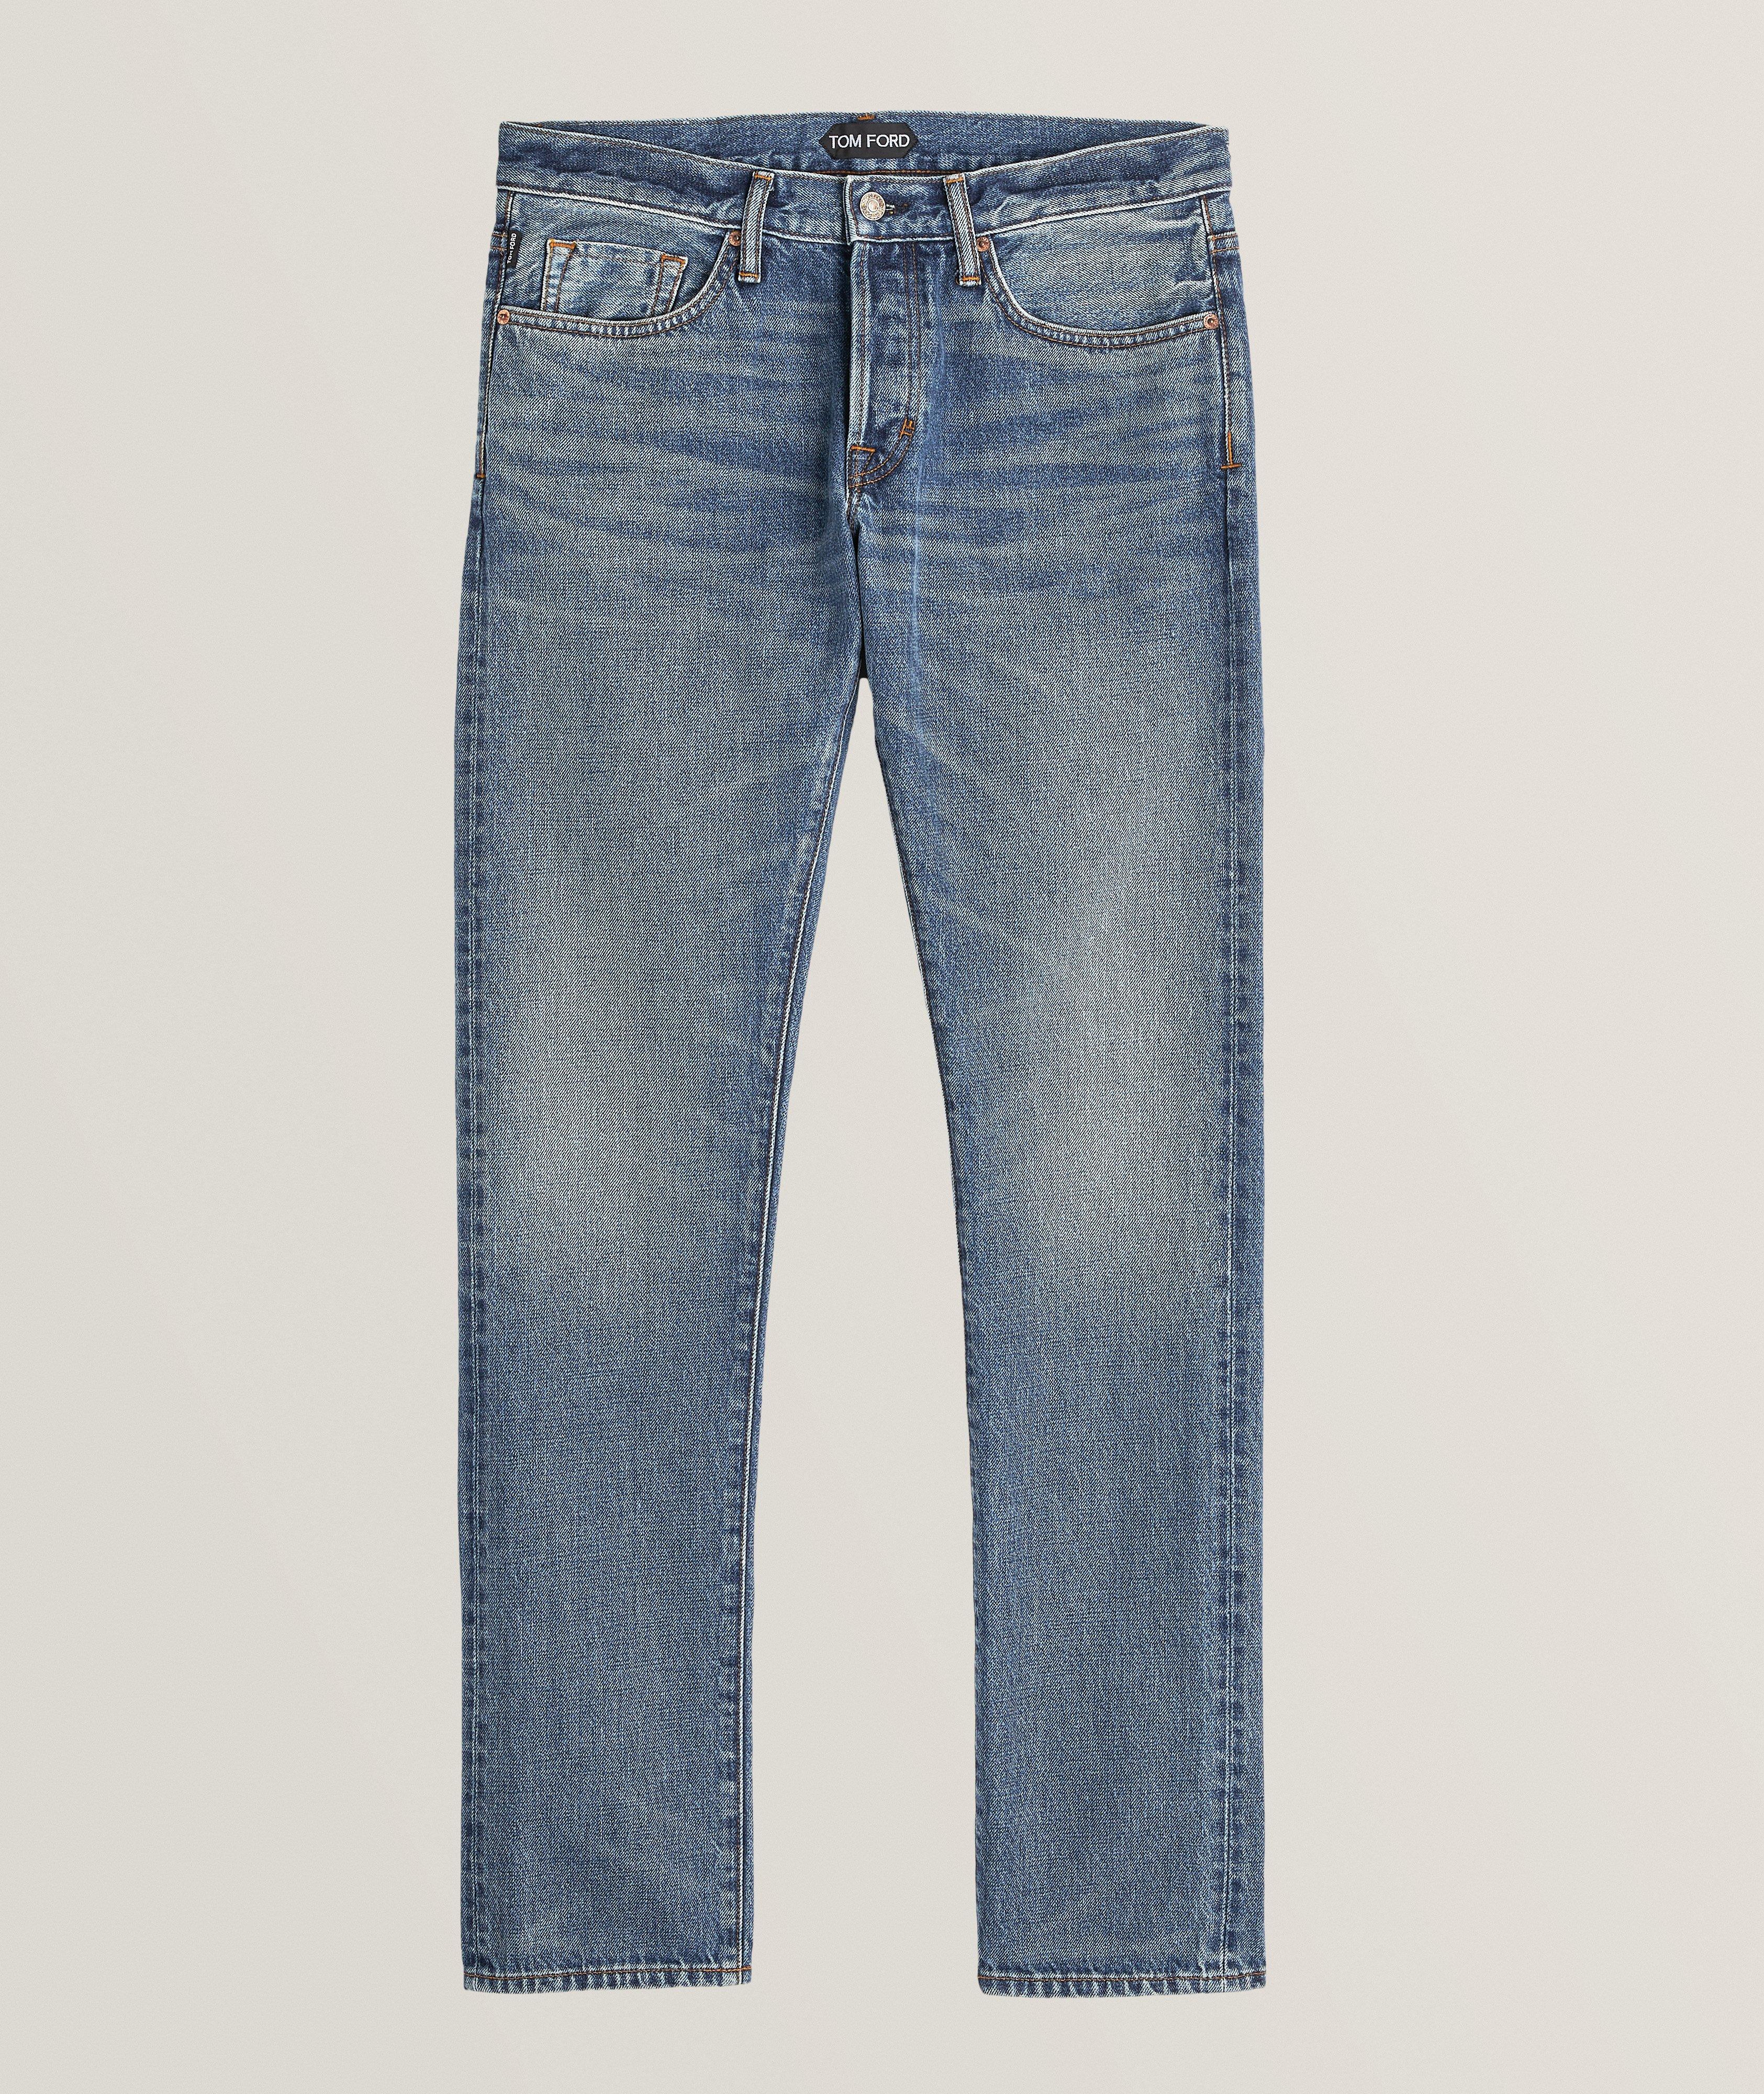 Slim-Fit Selvedge Jeans image 0